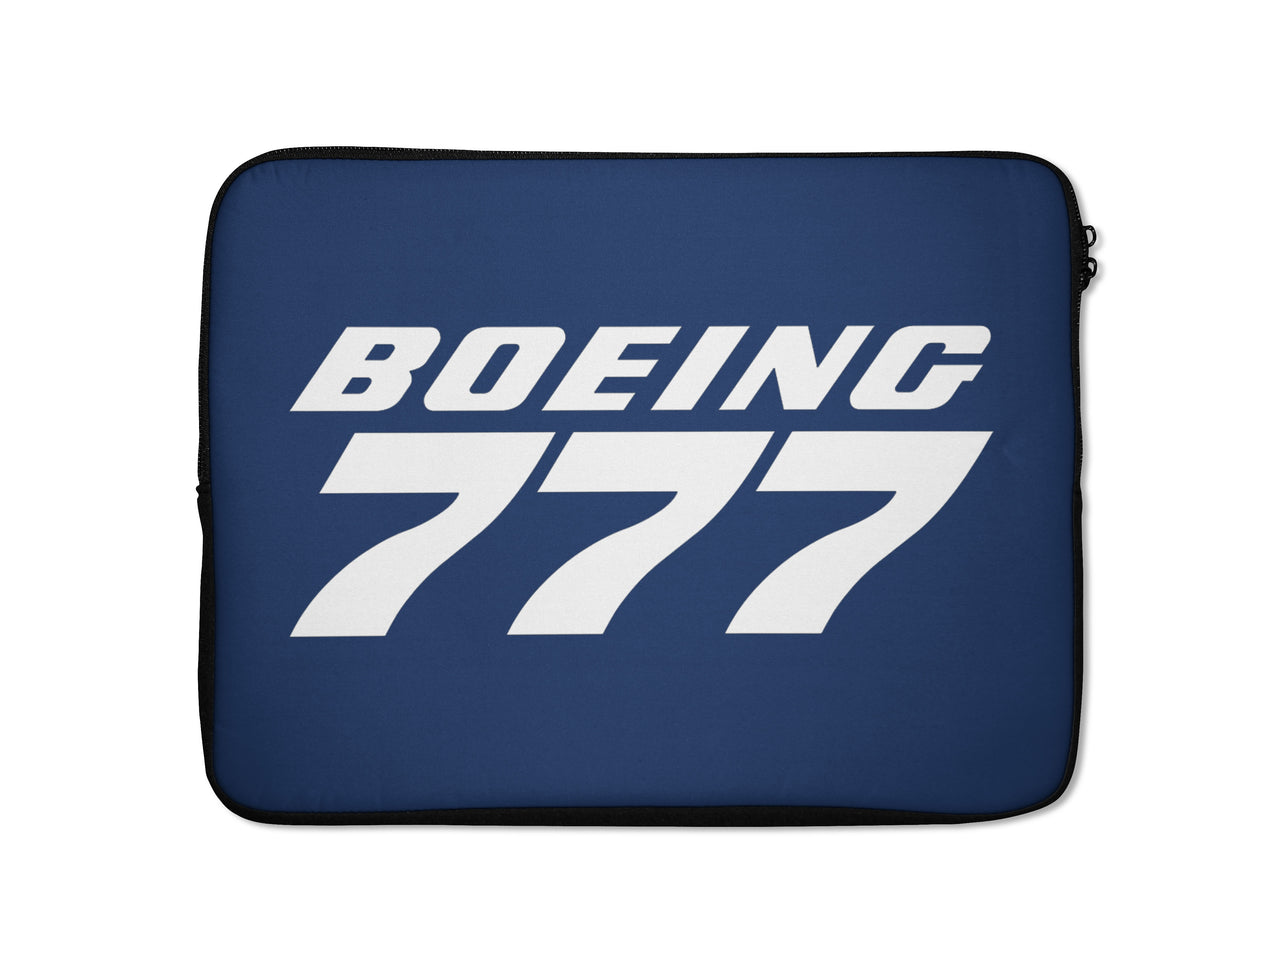 Boeing 777 & Text Designed Laptop & Tablet Cases